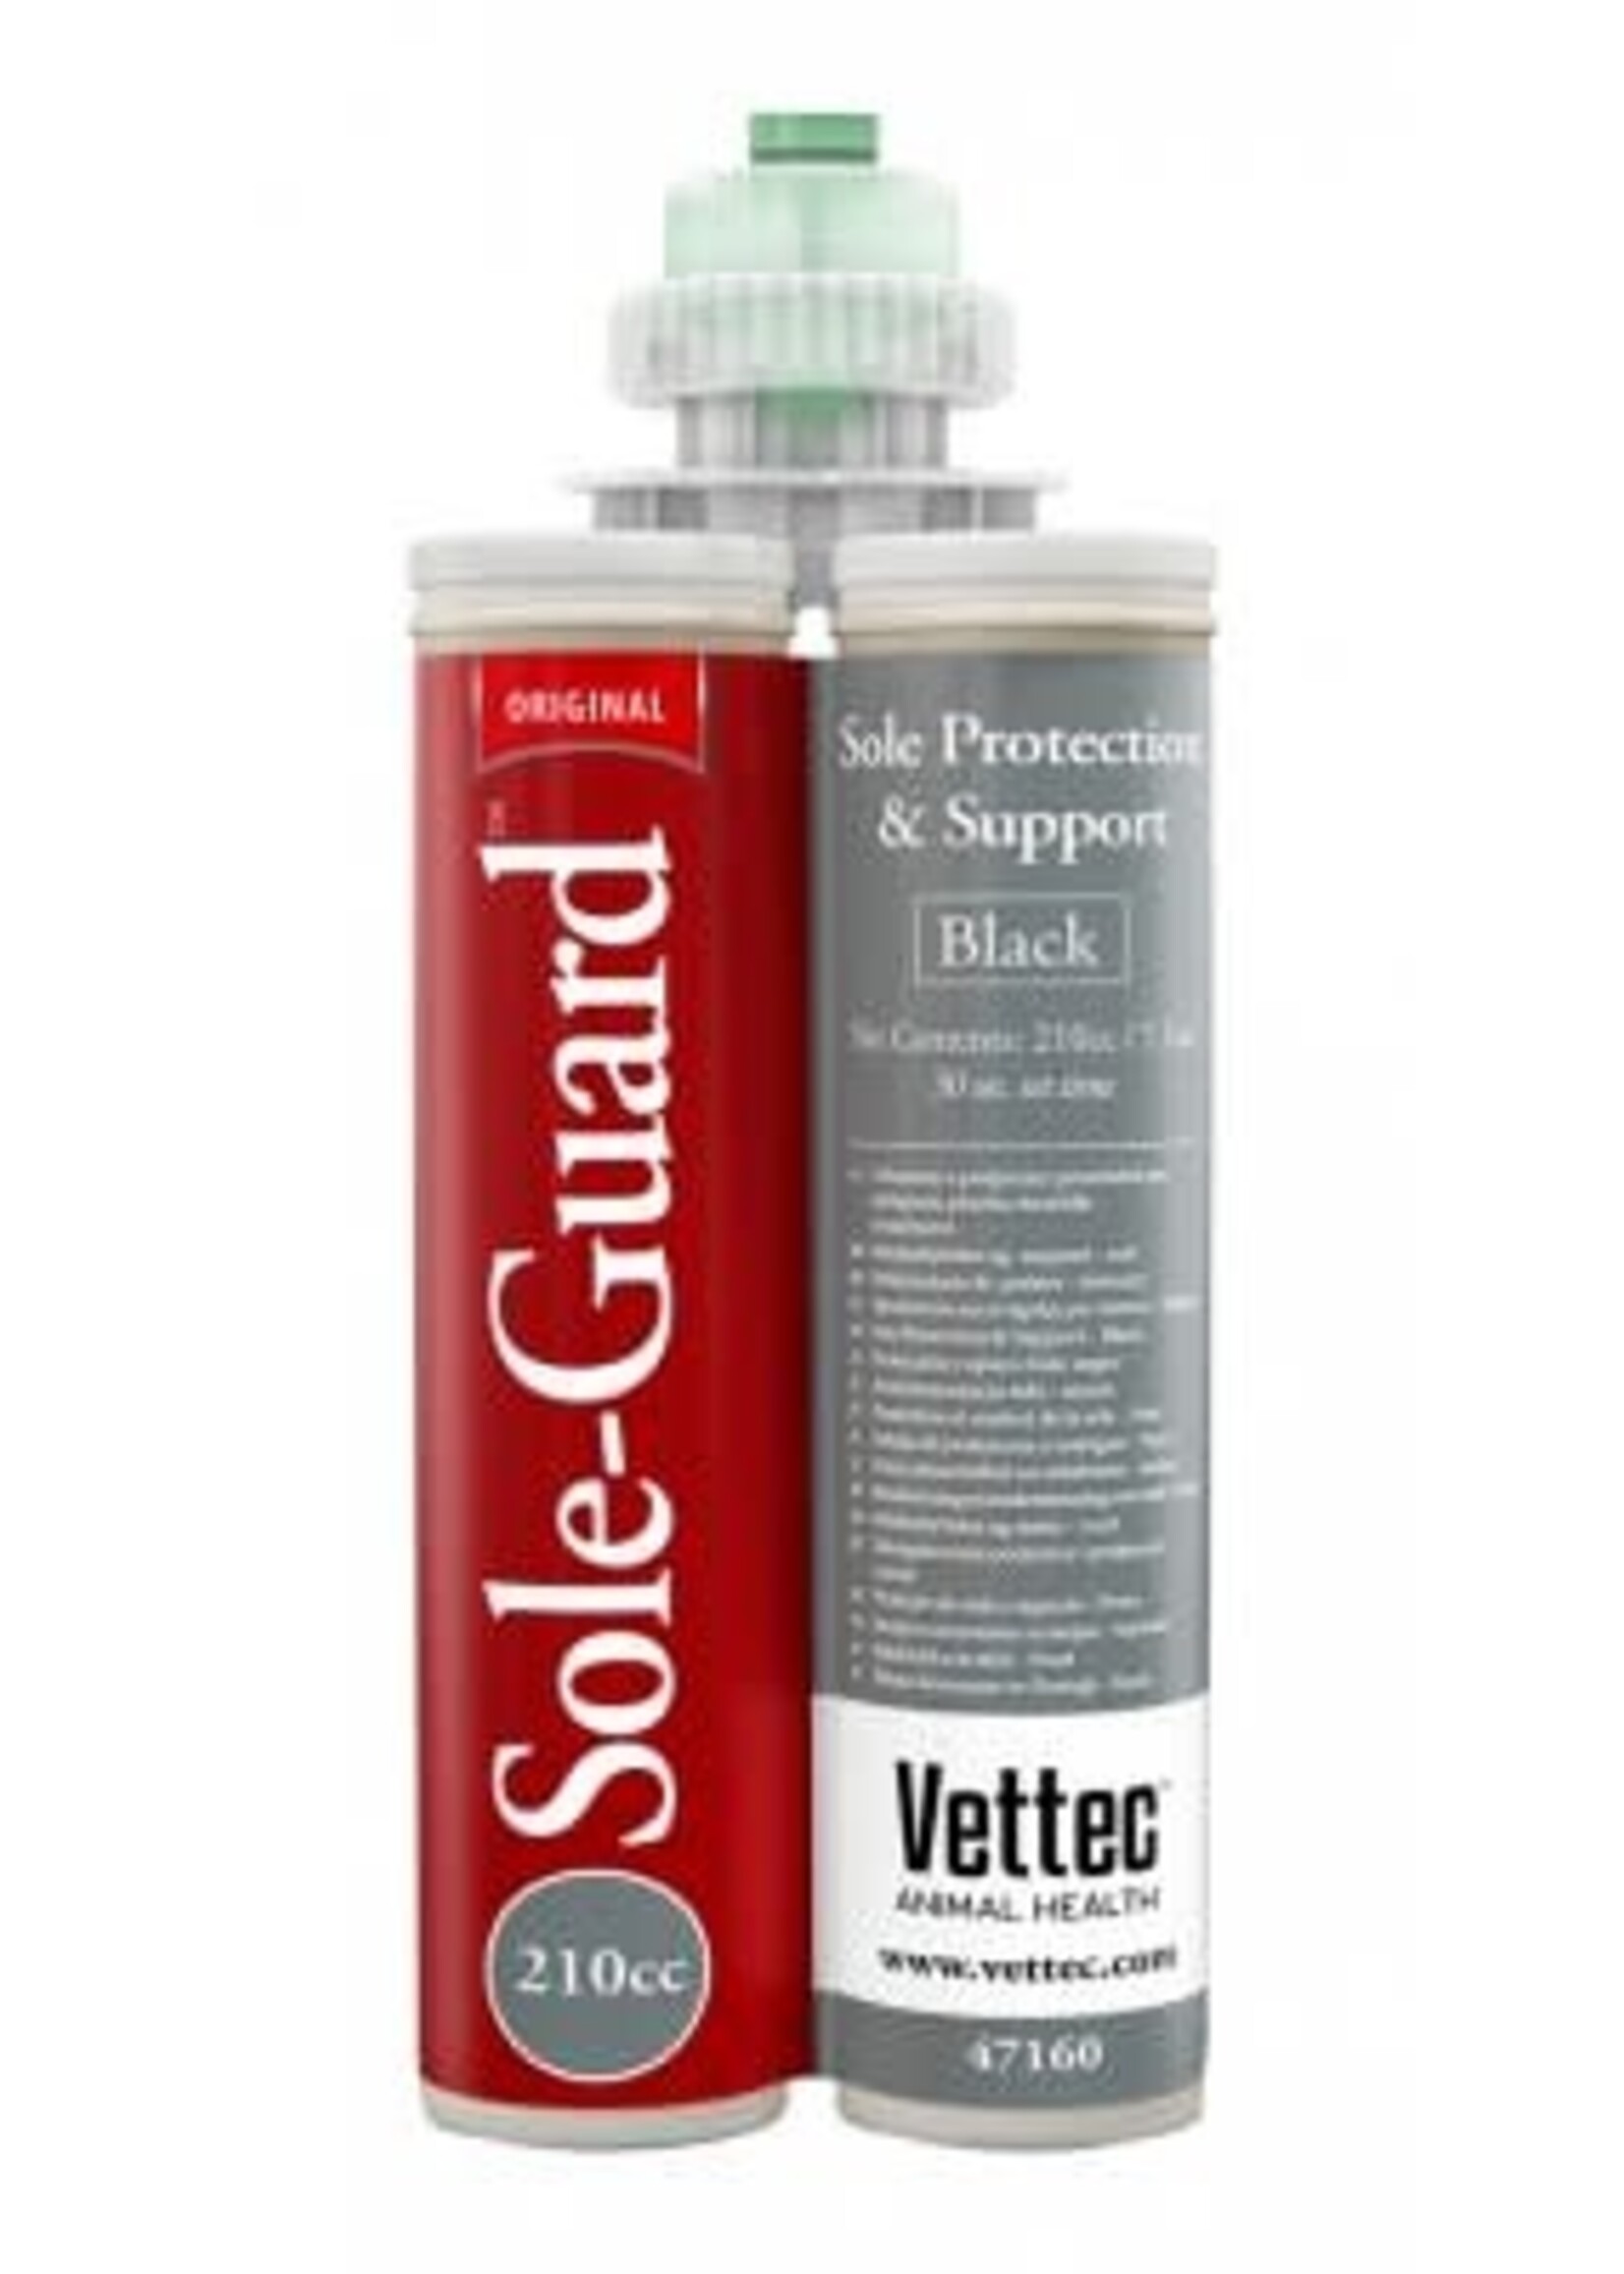 Vettec Vettec Sole-Guard Adhesive 210cc